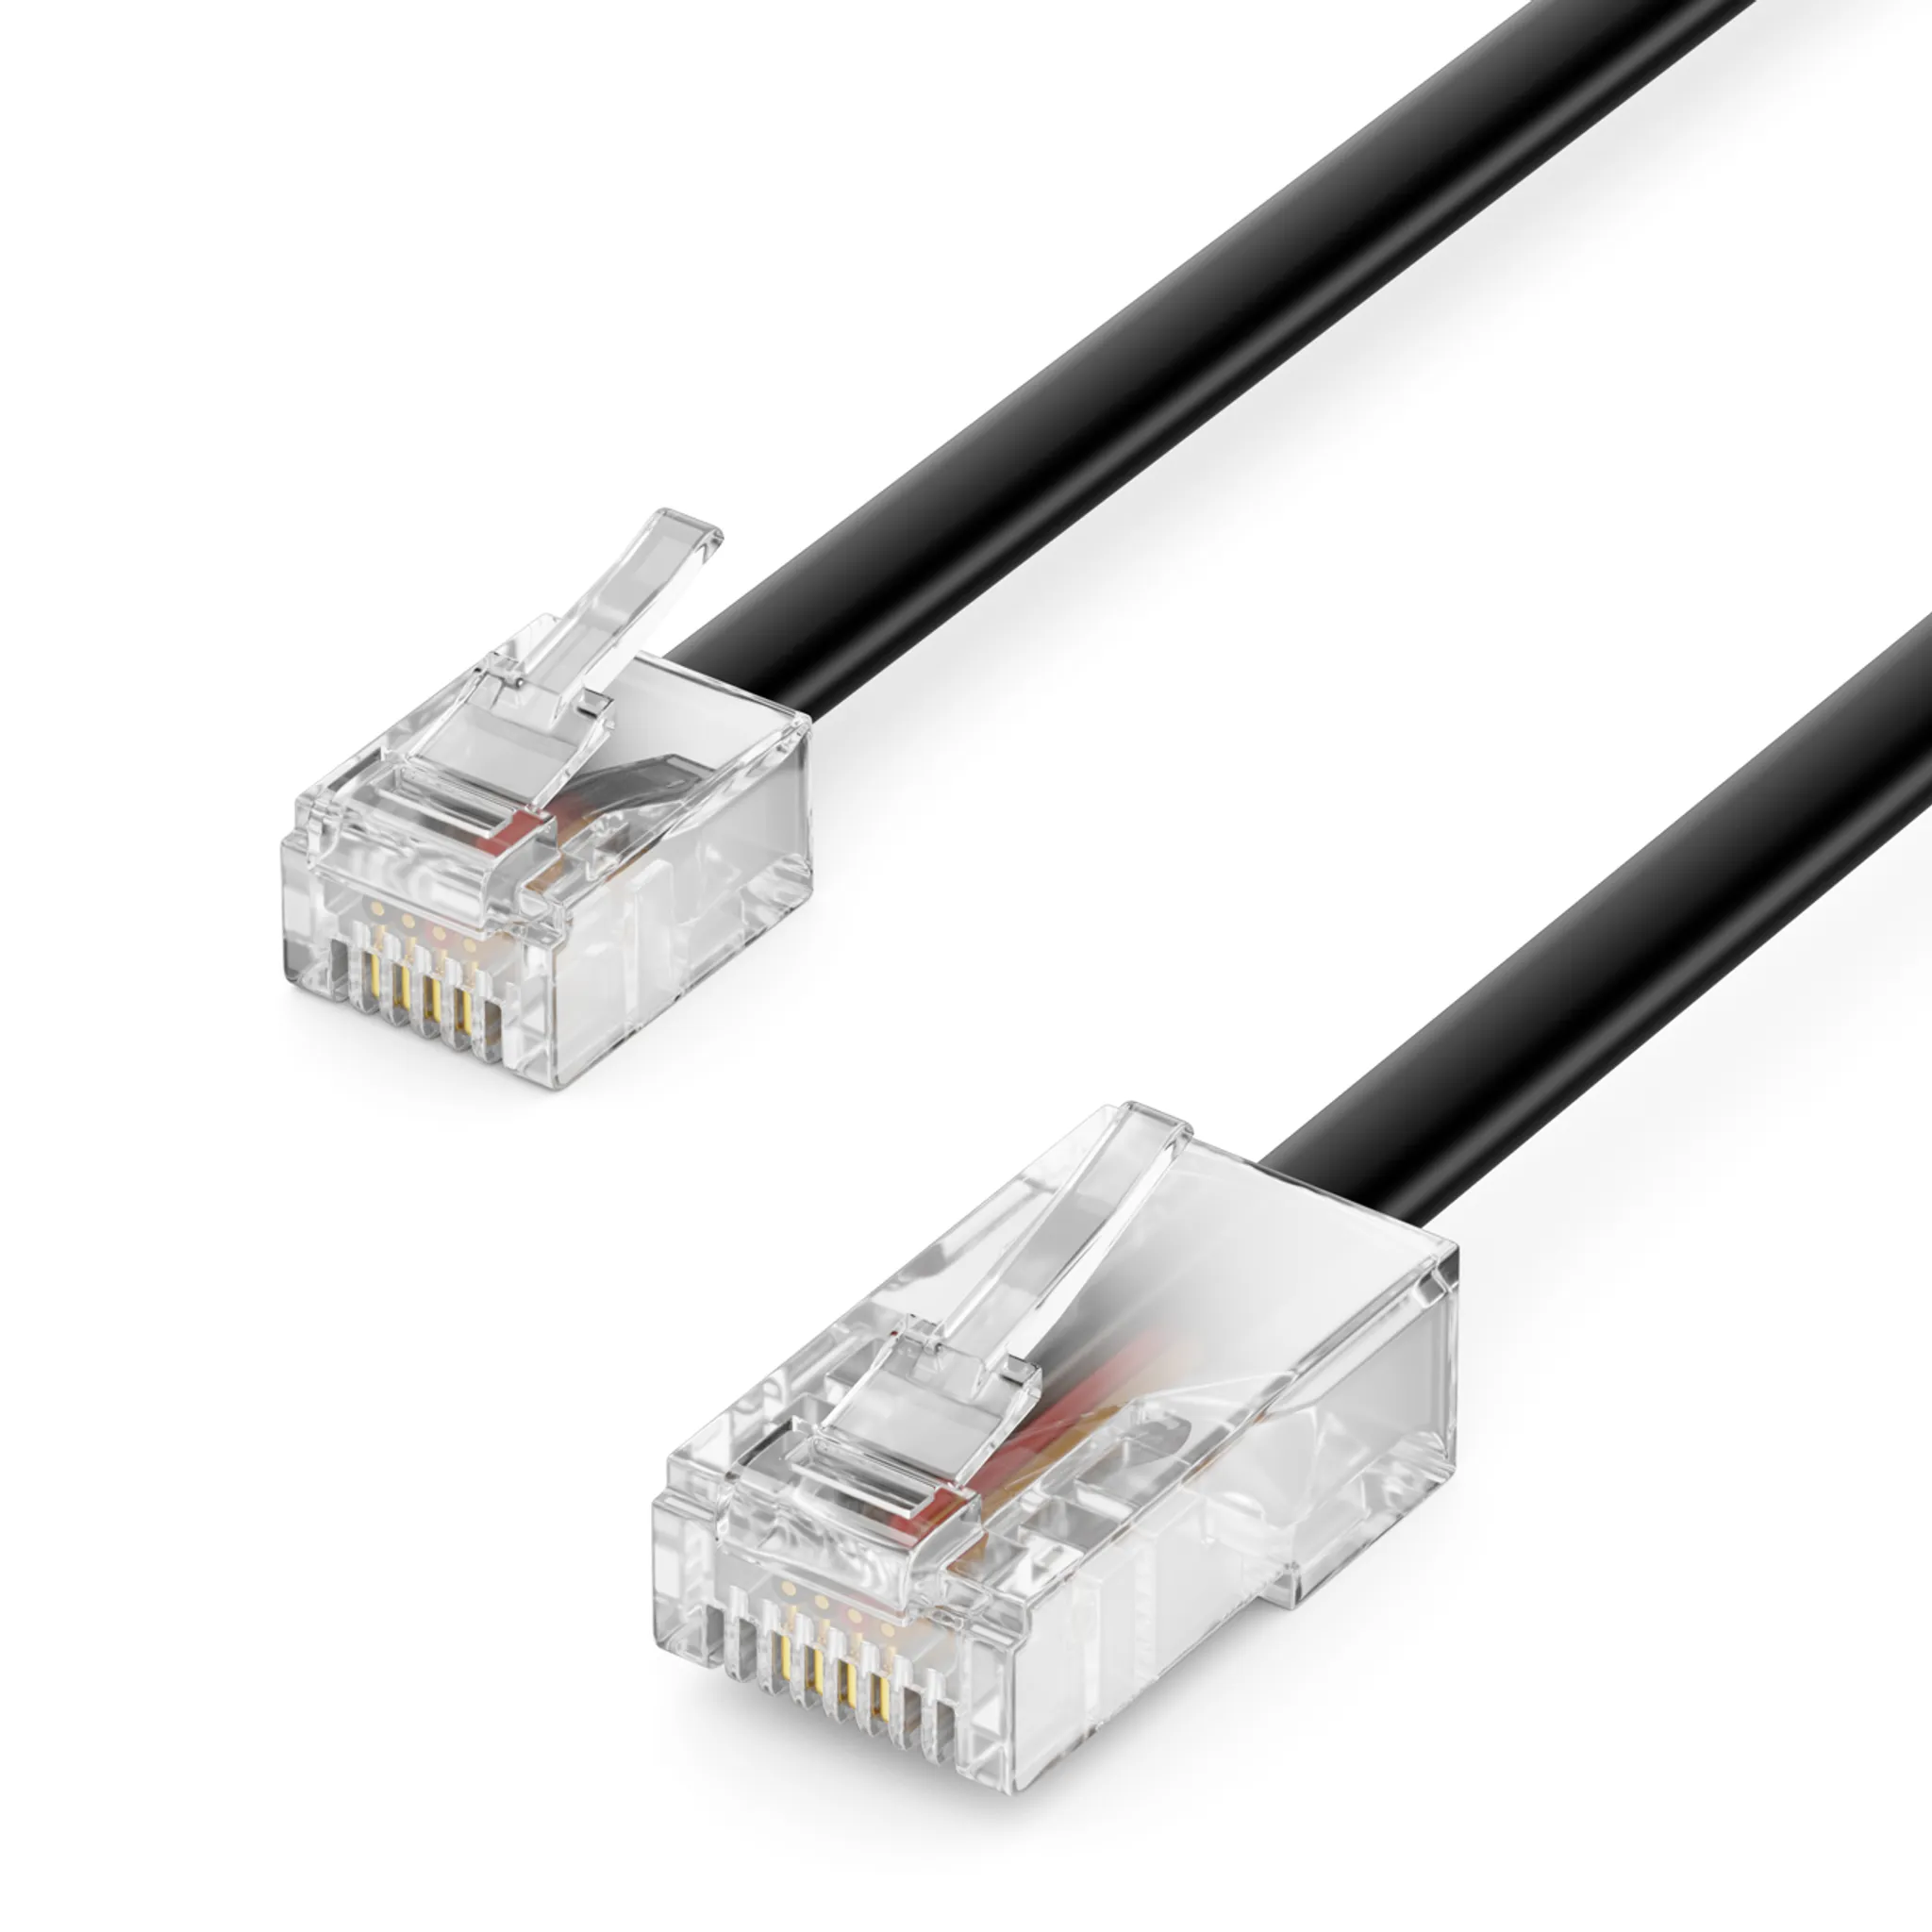 DSL-Box-Kabel, TAE-F-Stecker - Modular-Stecker 8p2c, 3 m, Schwarz